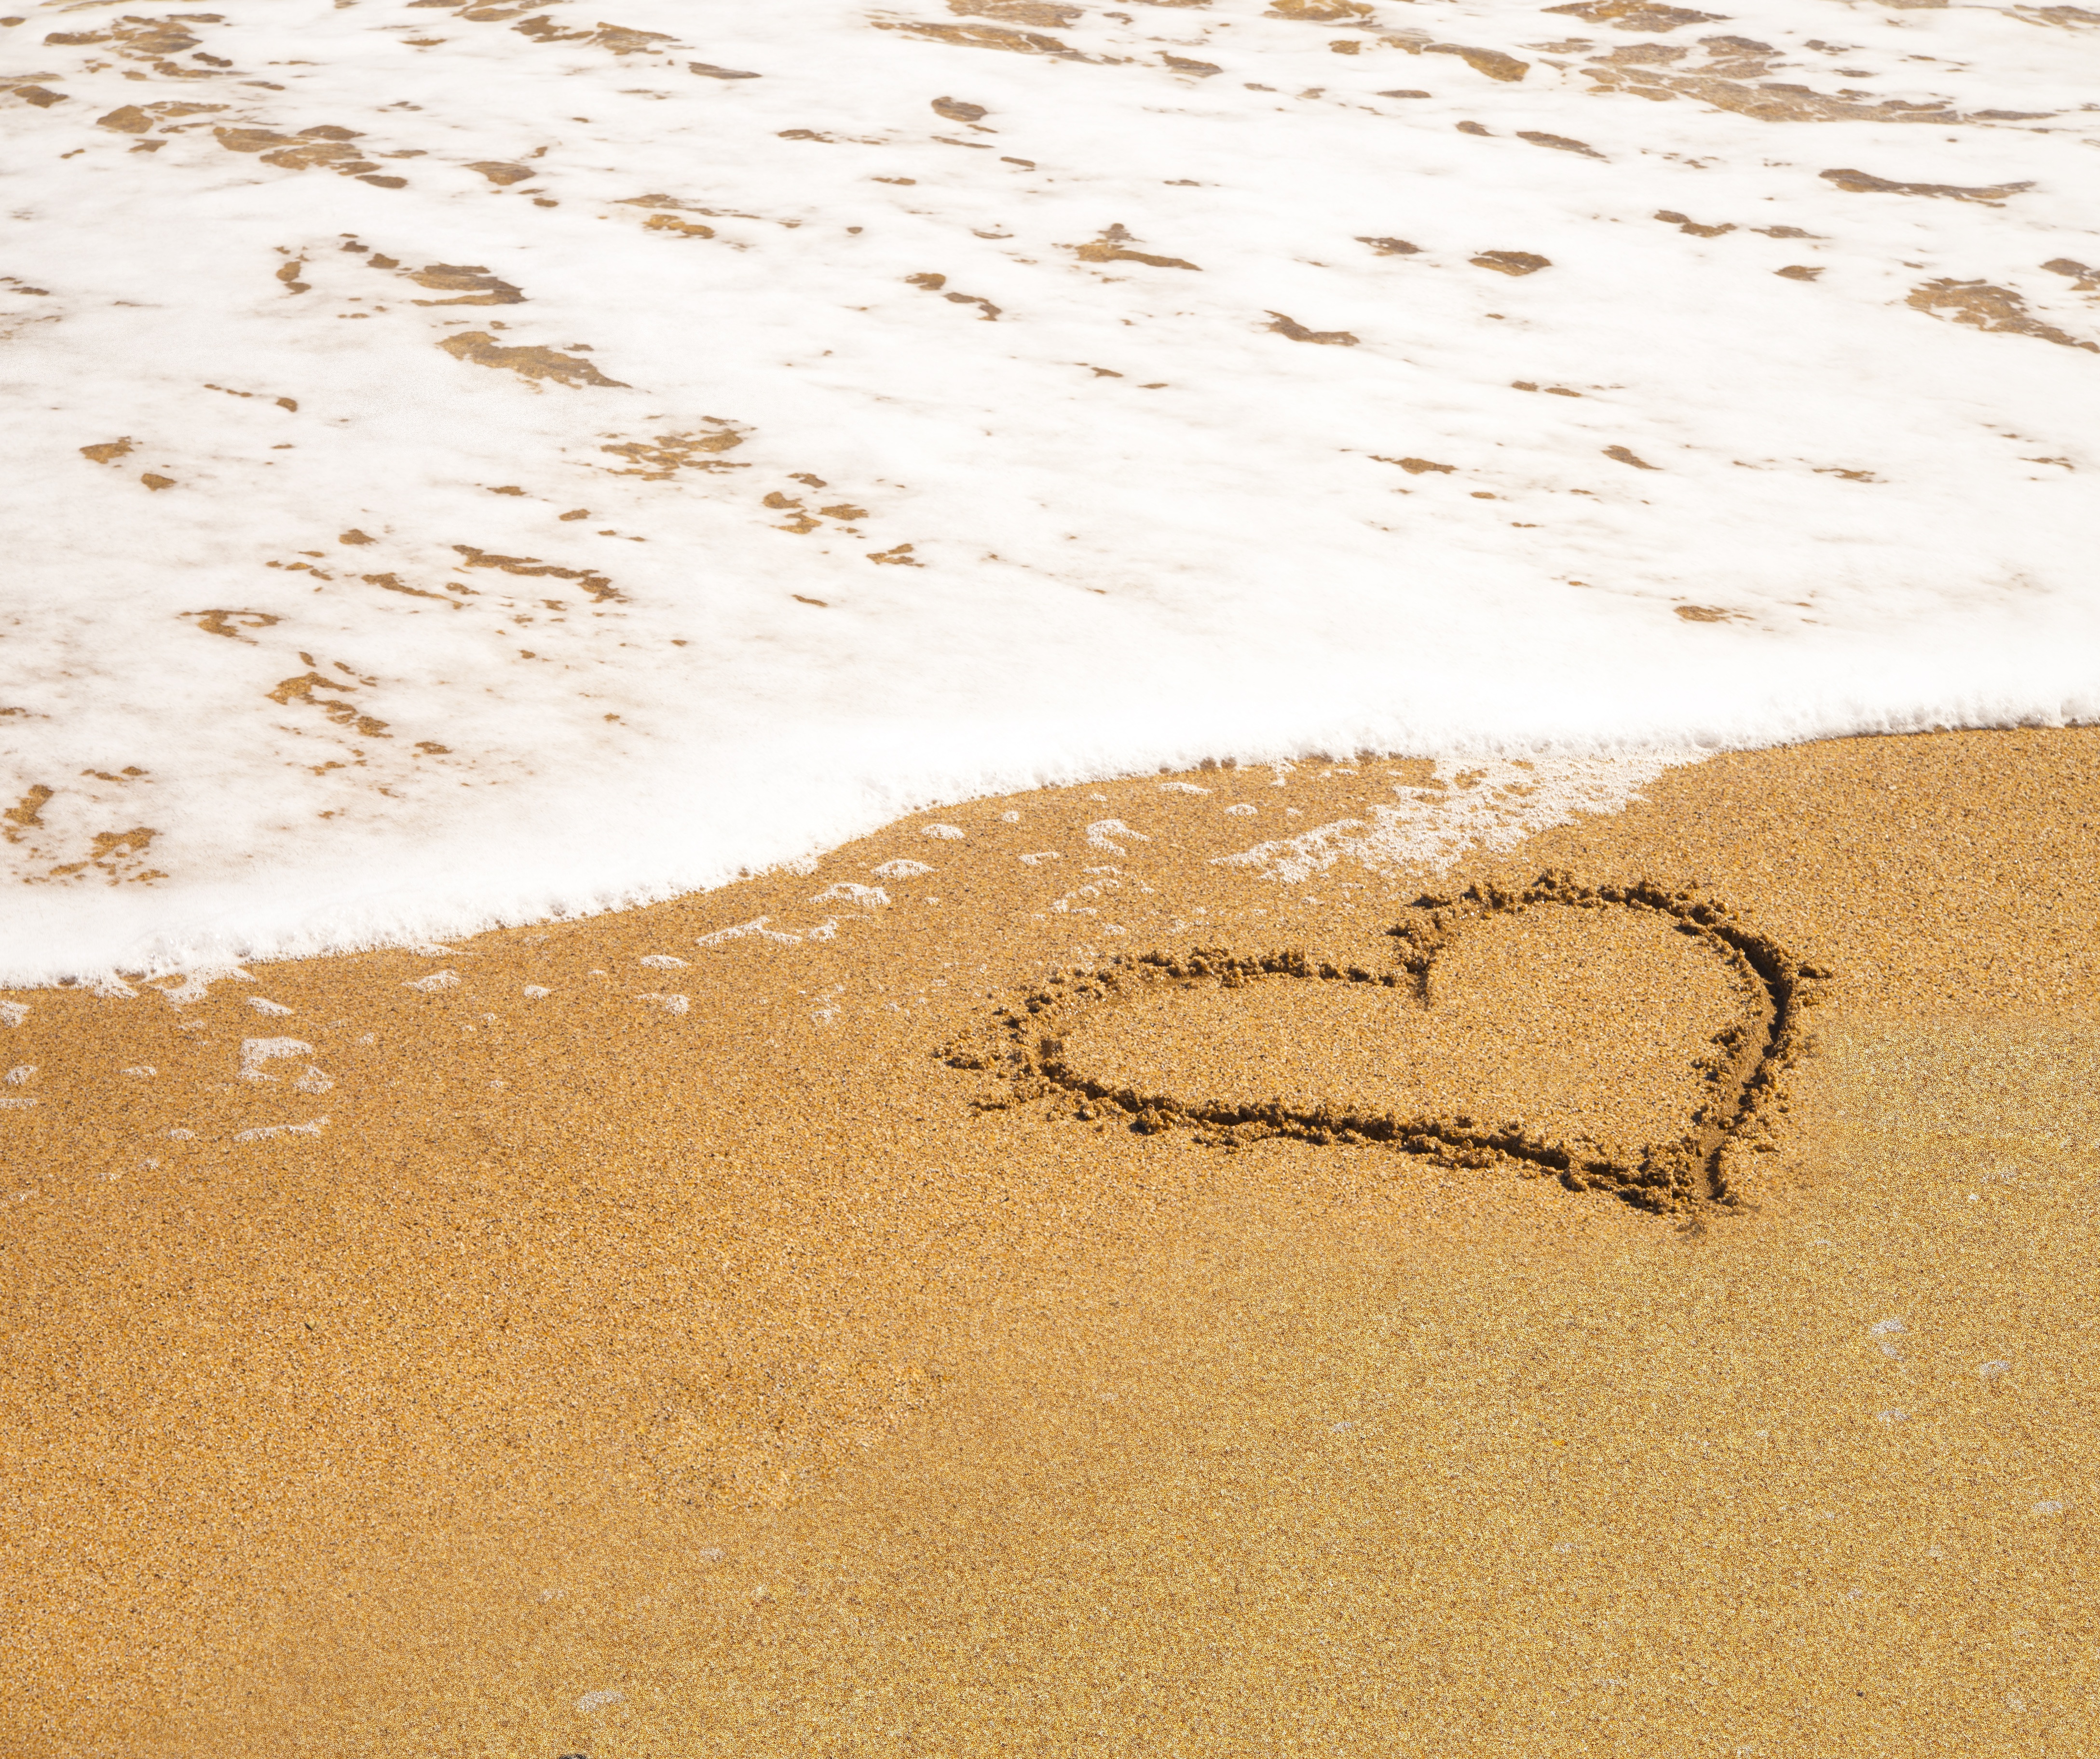 Текст следы на песке. Сердечко на песке. Надпись на песке. Романтические надписи на песке. Сердечко на песке у моря.